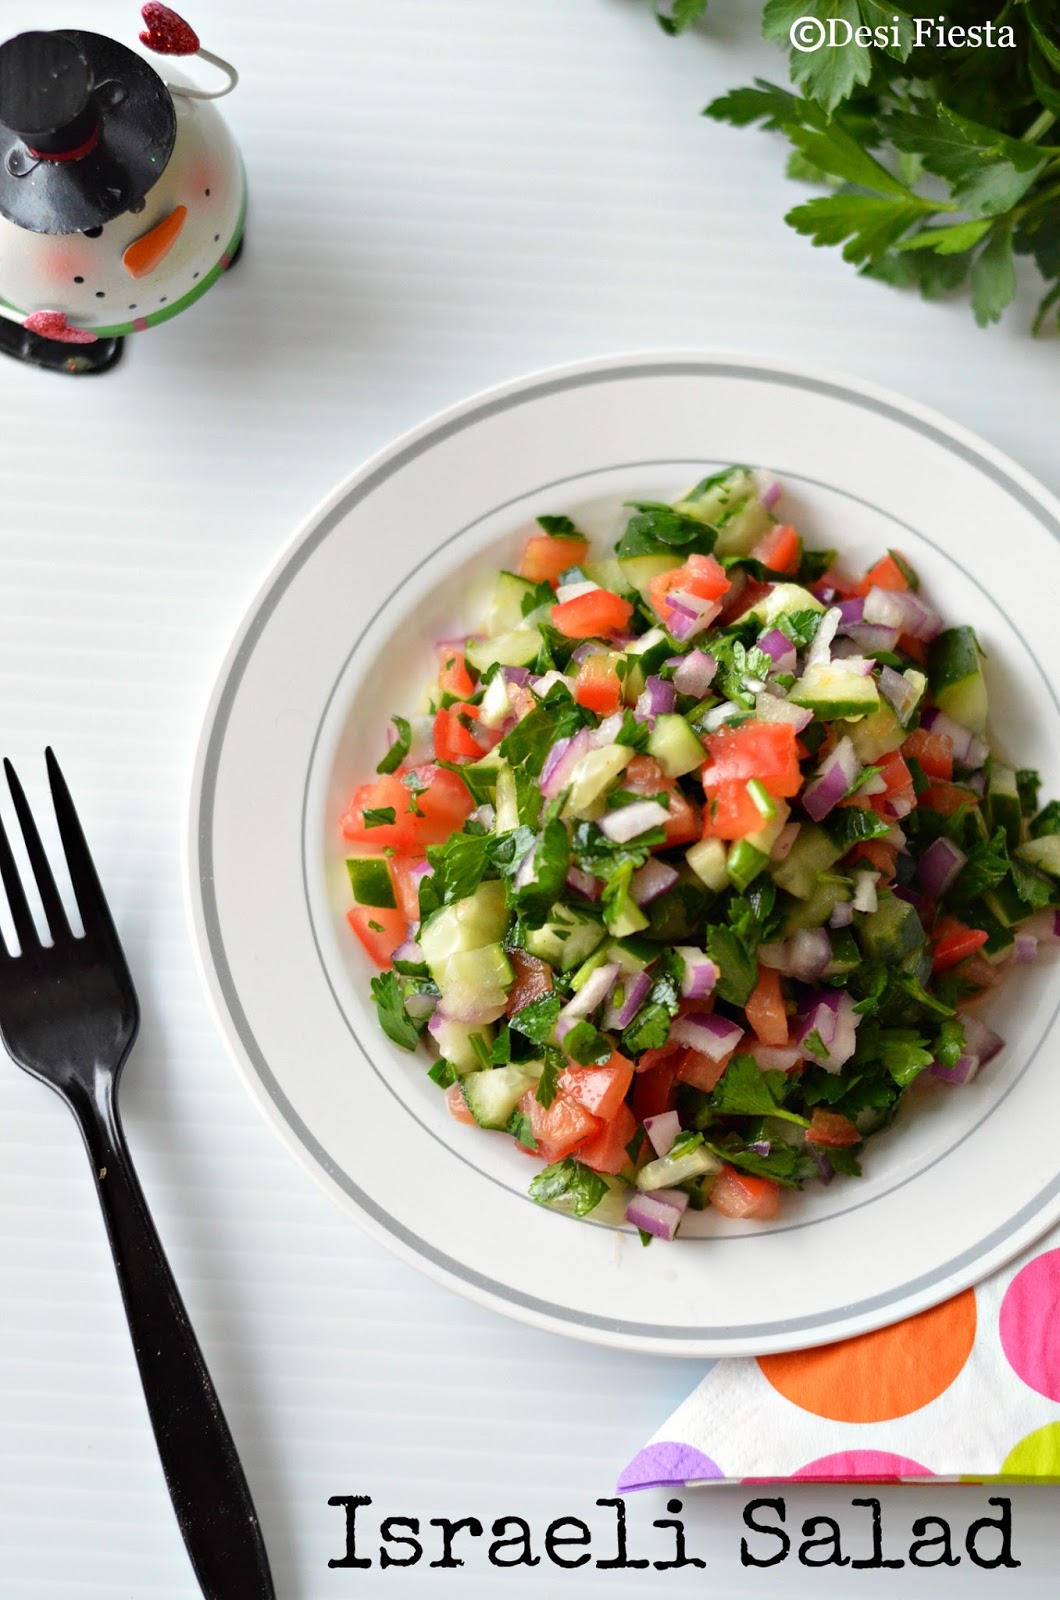 Israeli Salad | National Dish Of Israel - Desi Fiesta